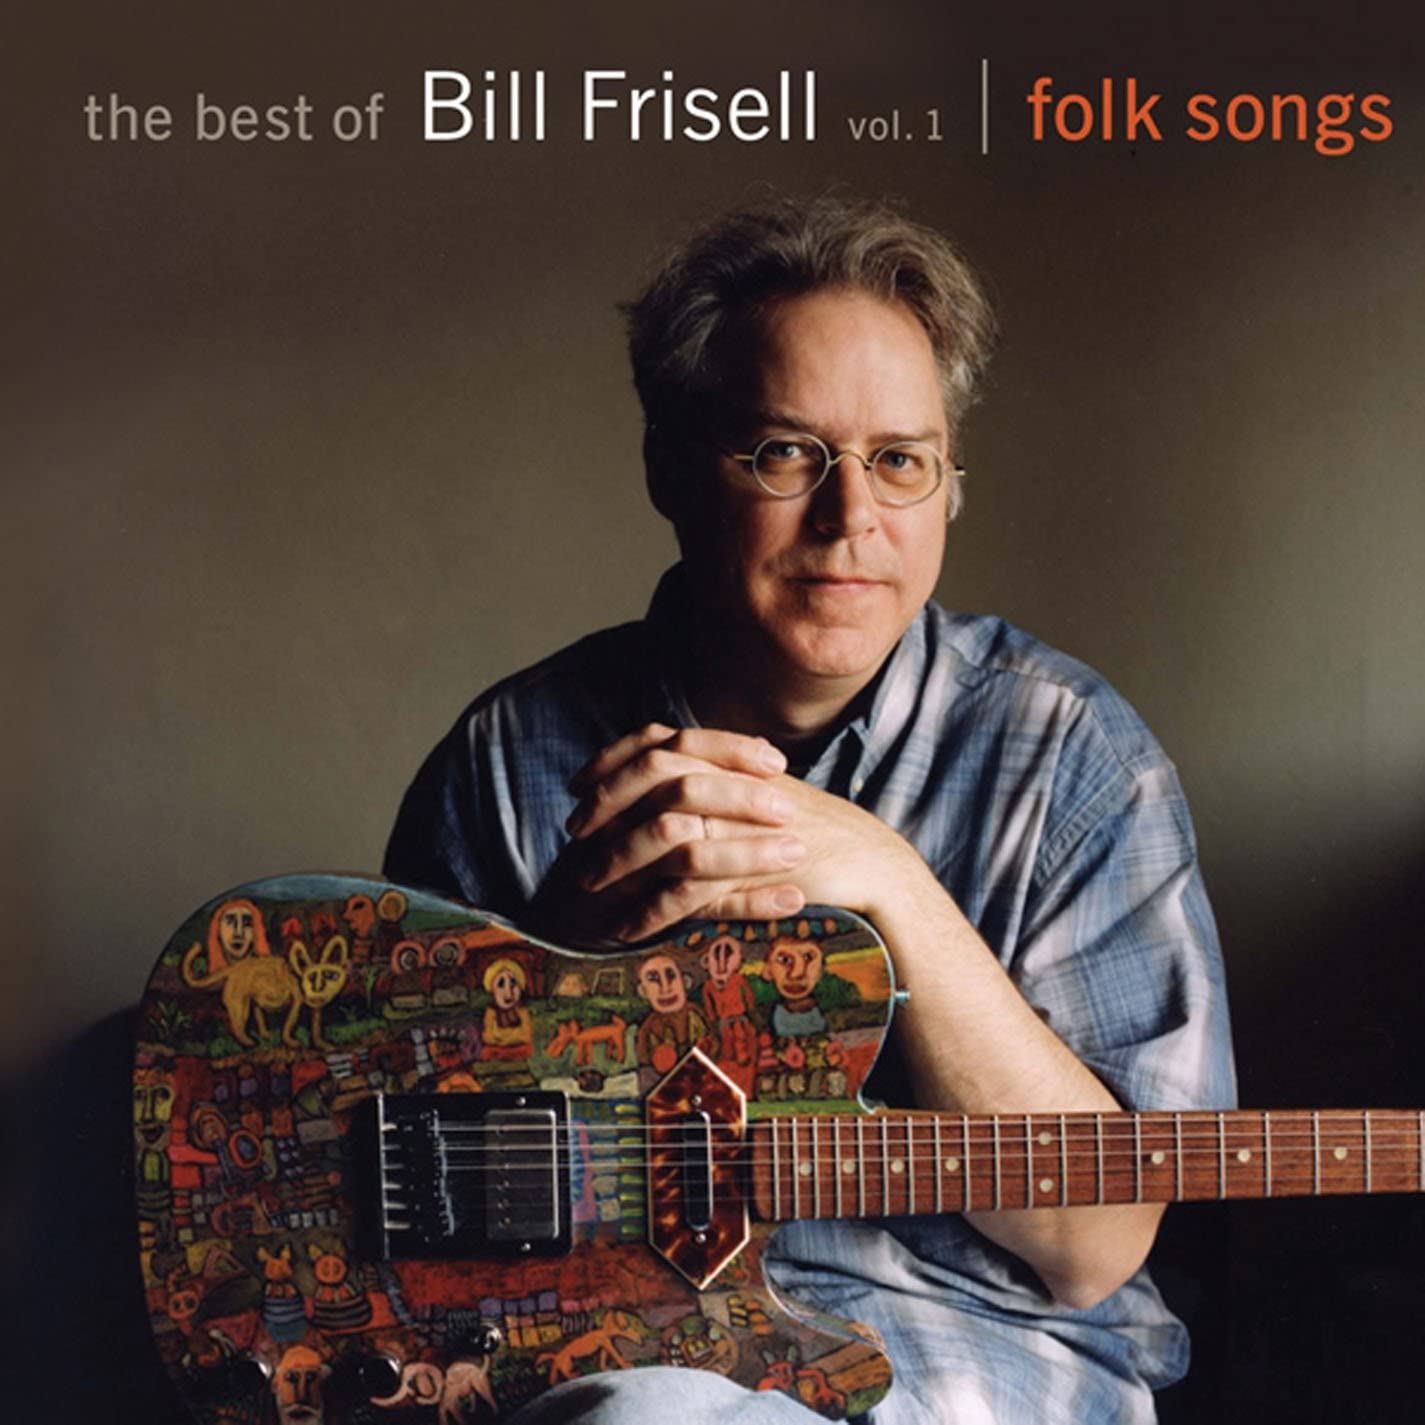 The Best Of Bill Frisell vol.1 folk songs [401]